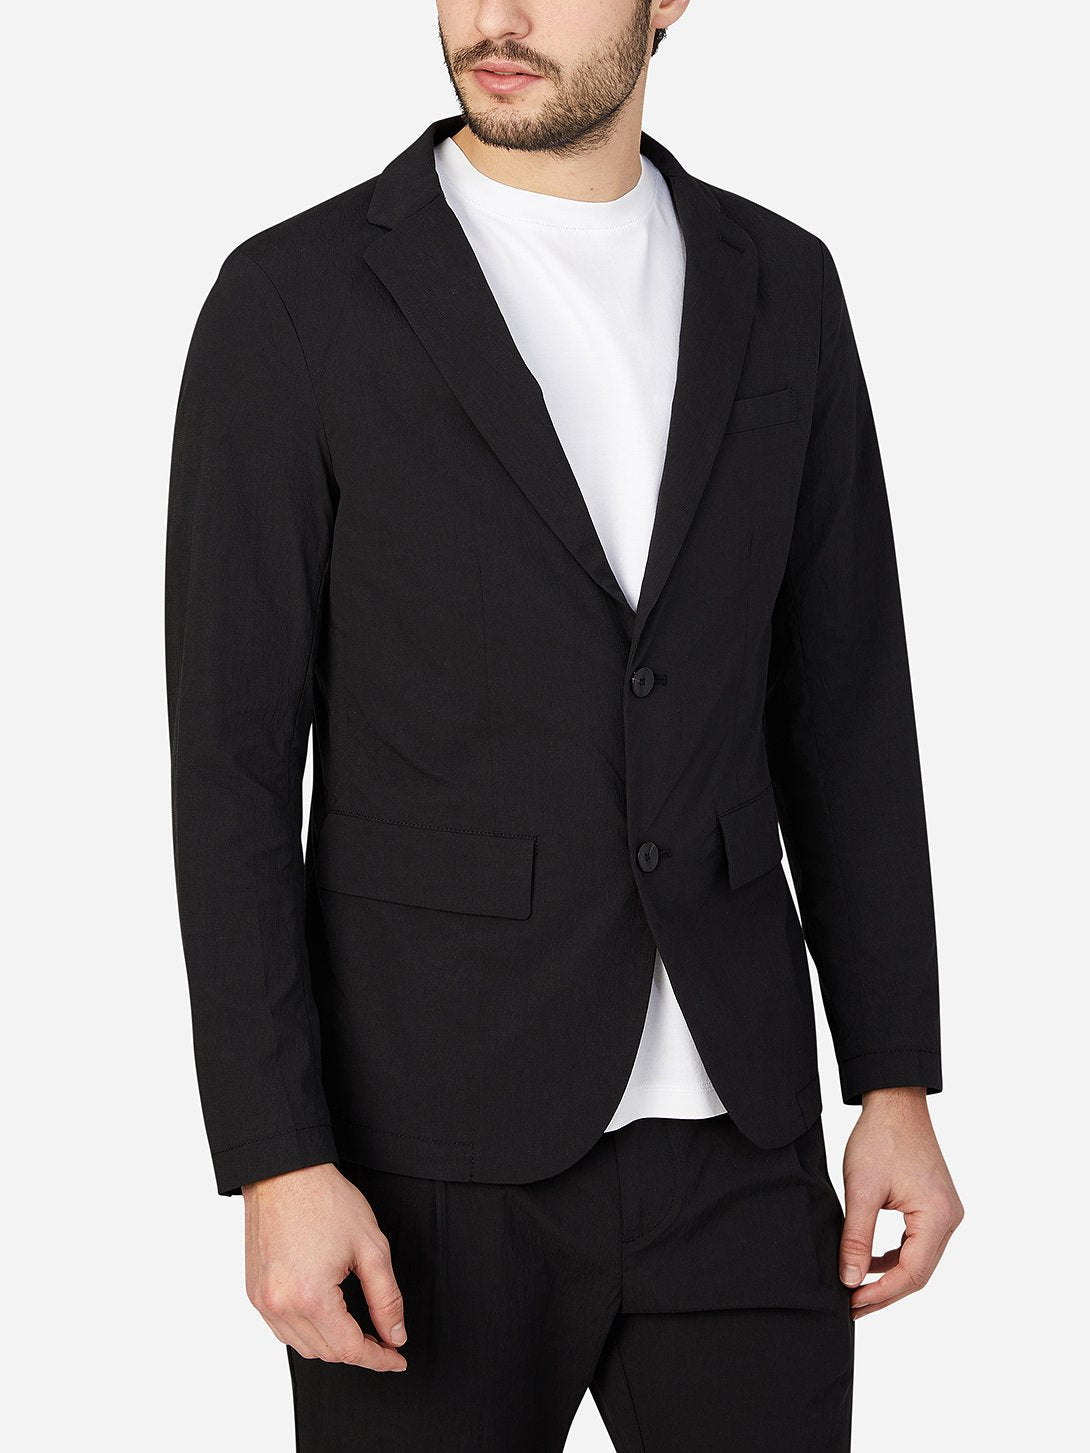 JET BLACK blazers for men conduit packable blazer ons clothing